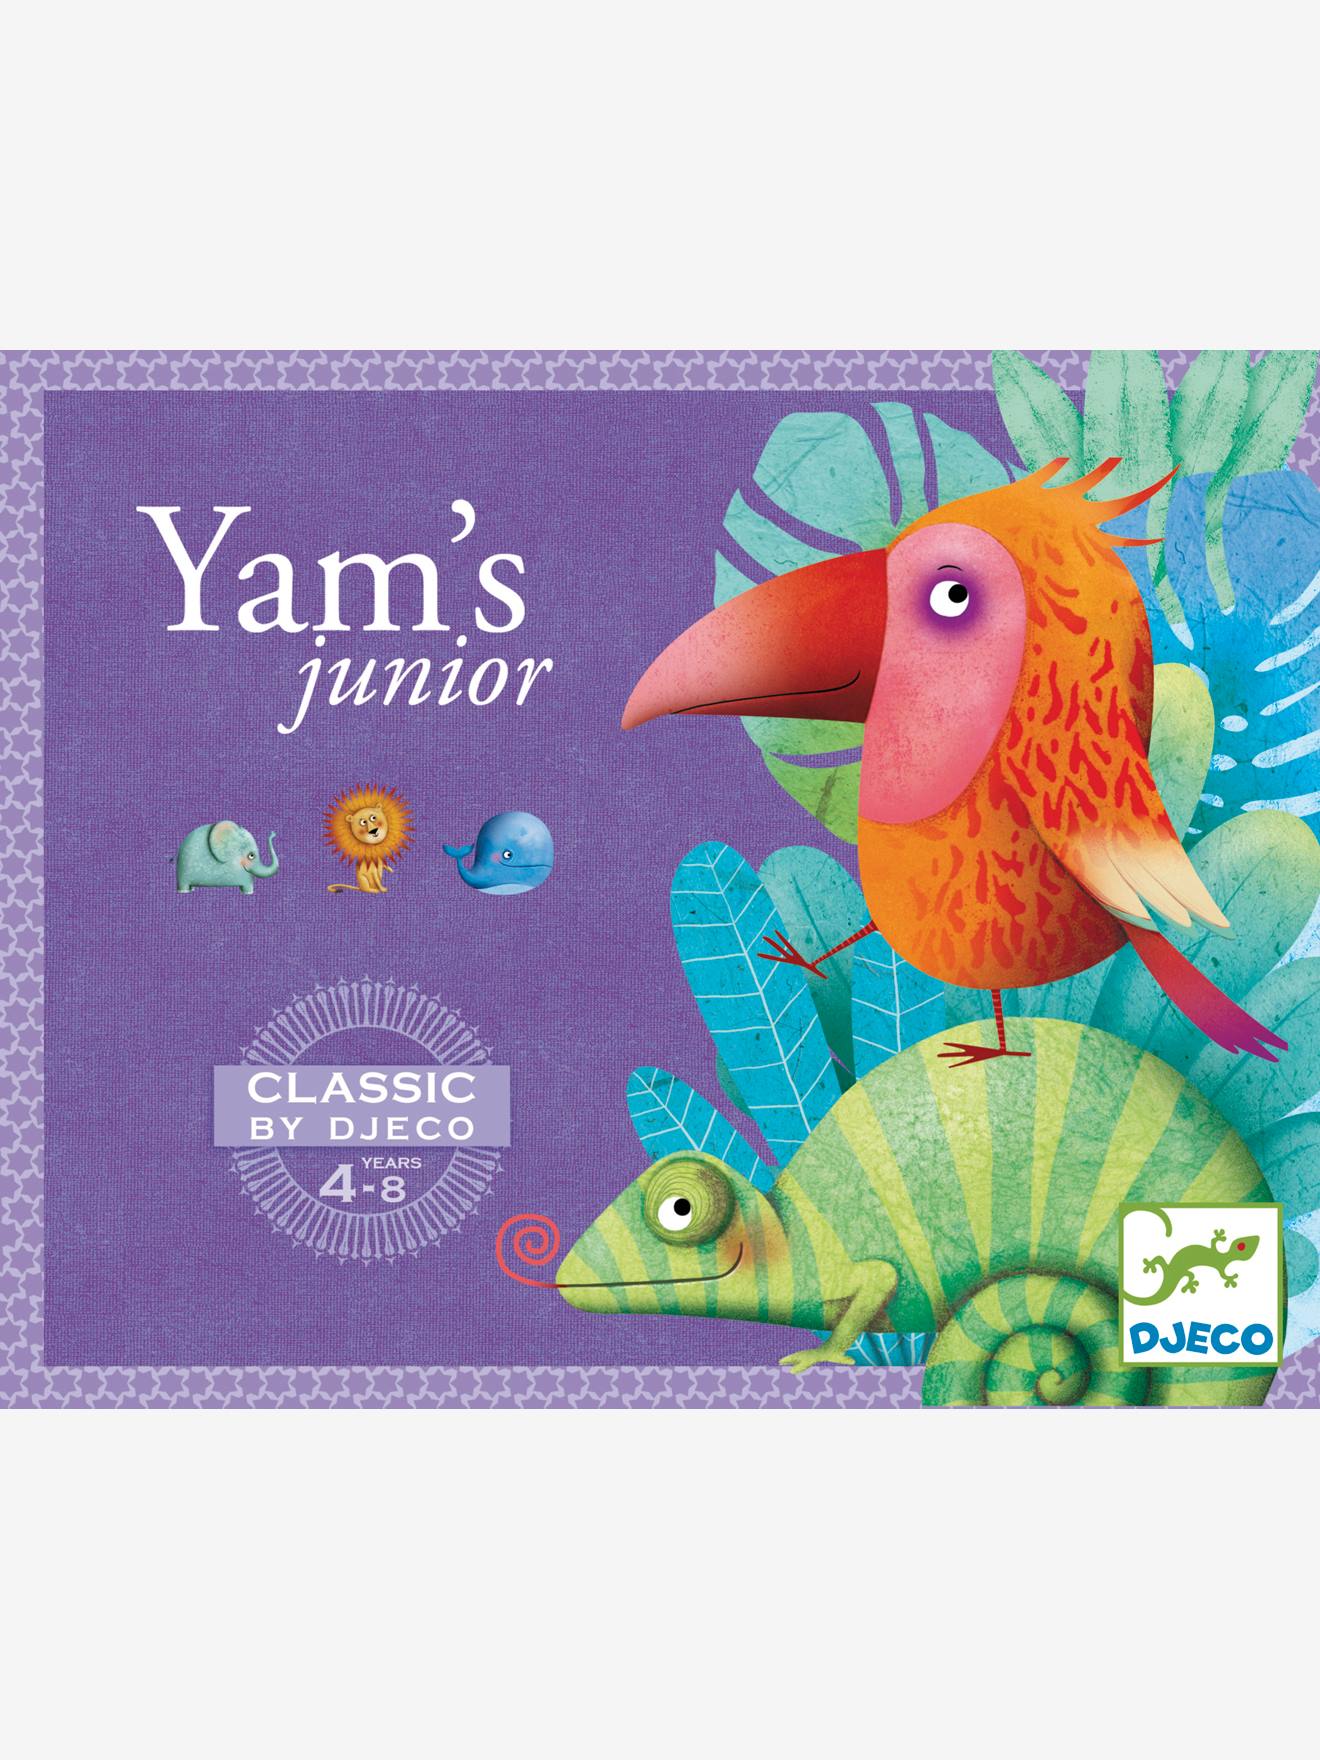 Yam’s Junior by DJECO purple